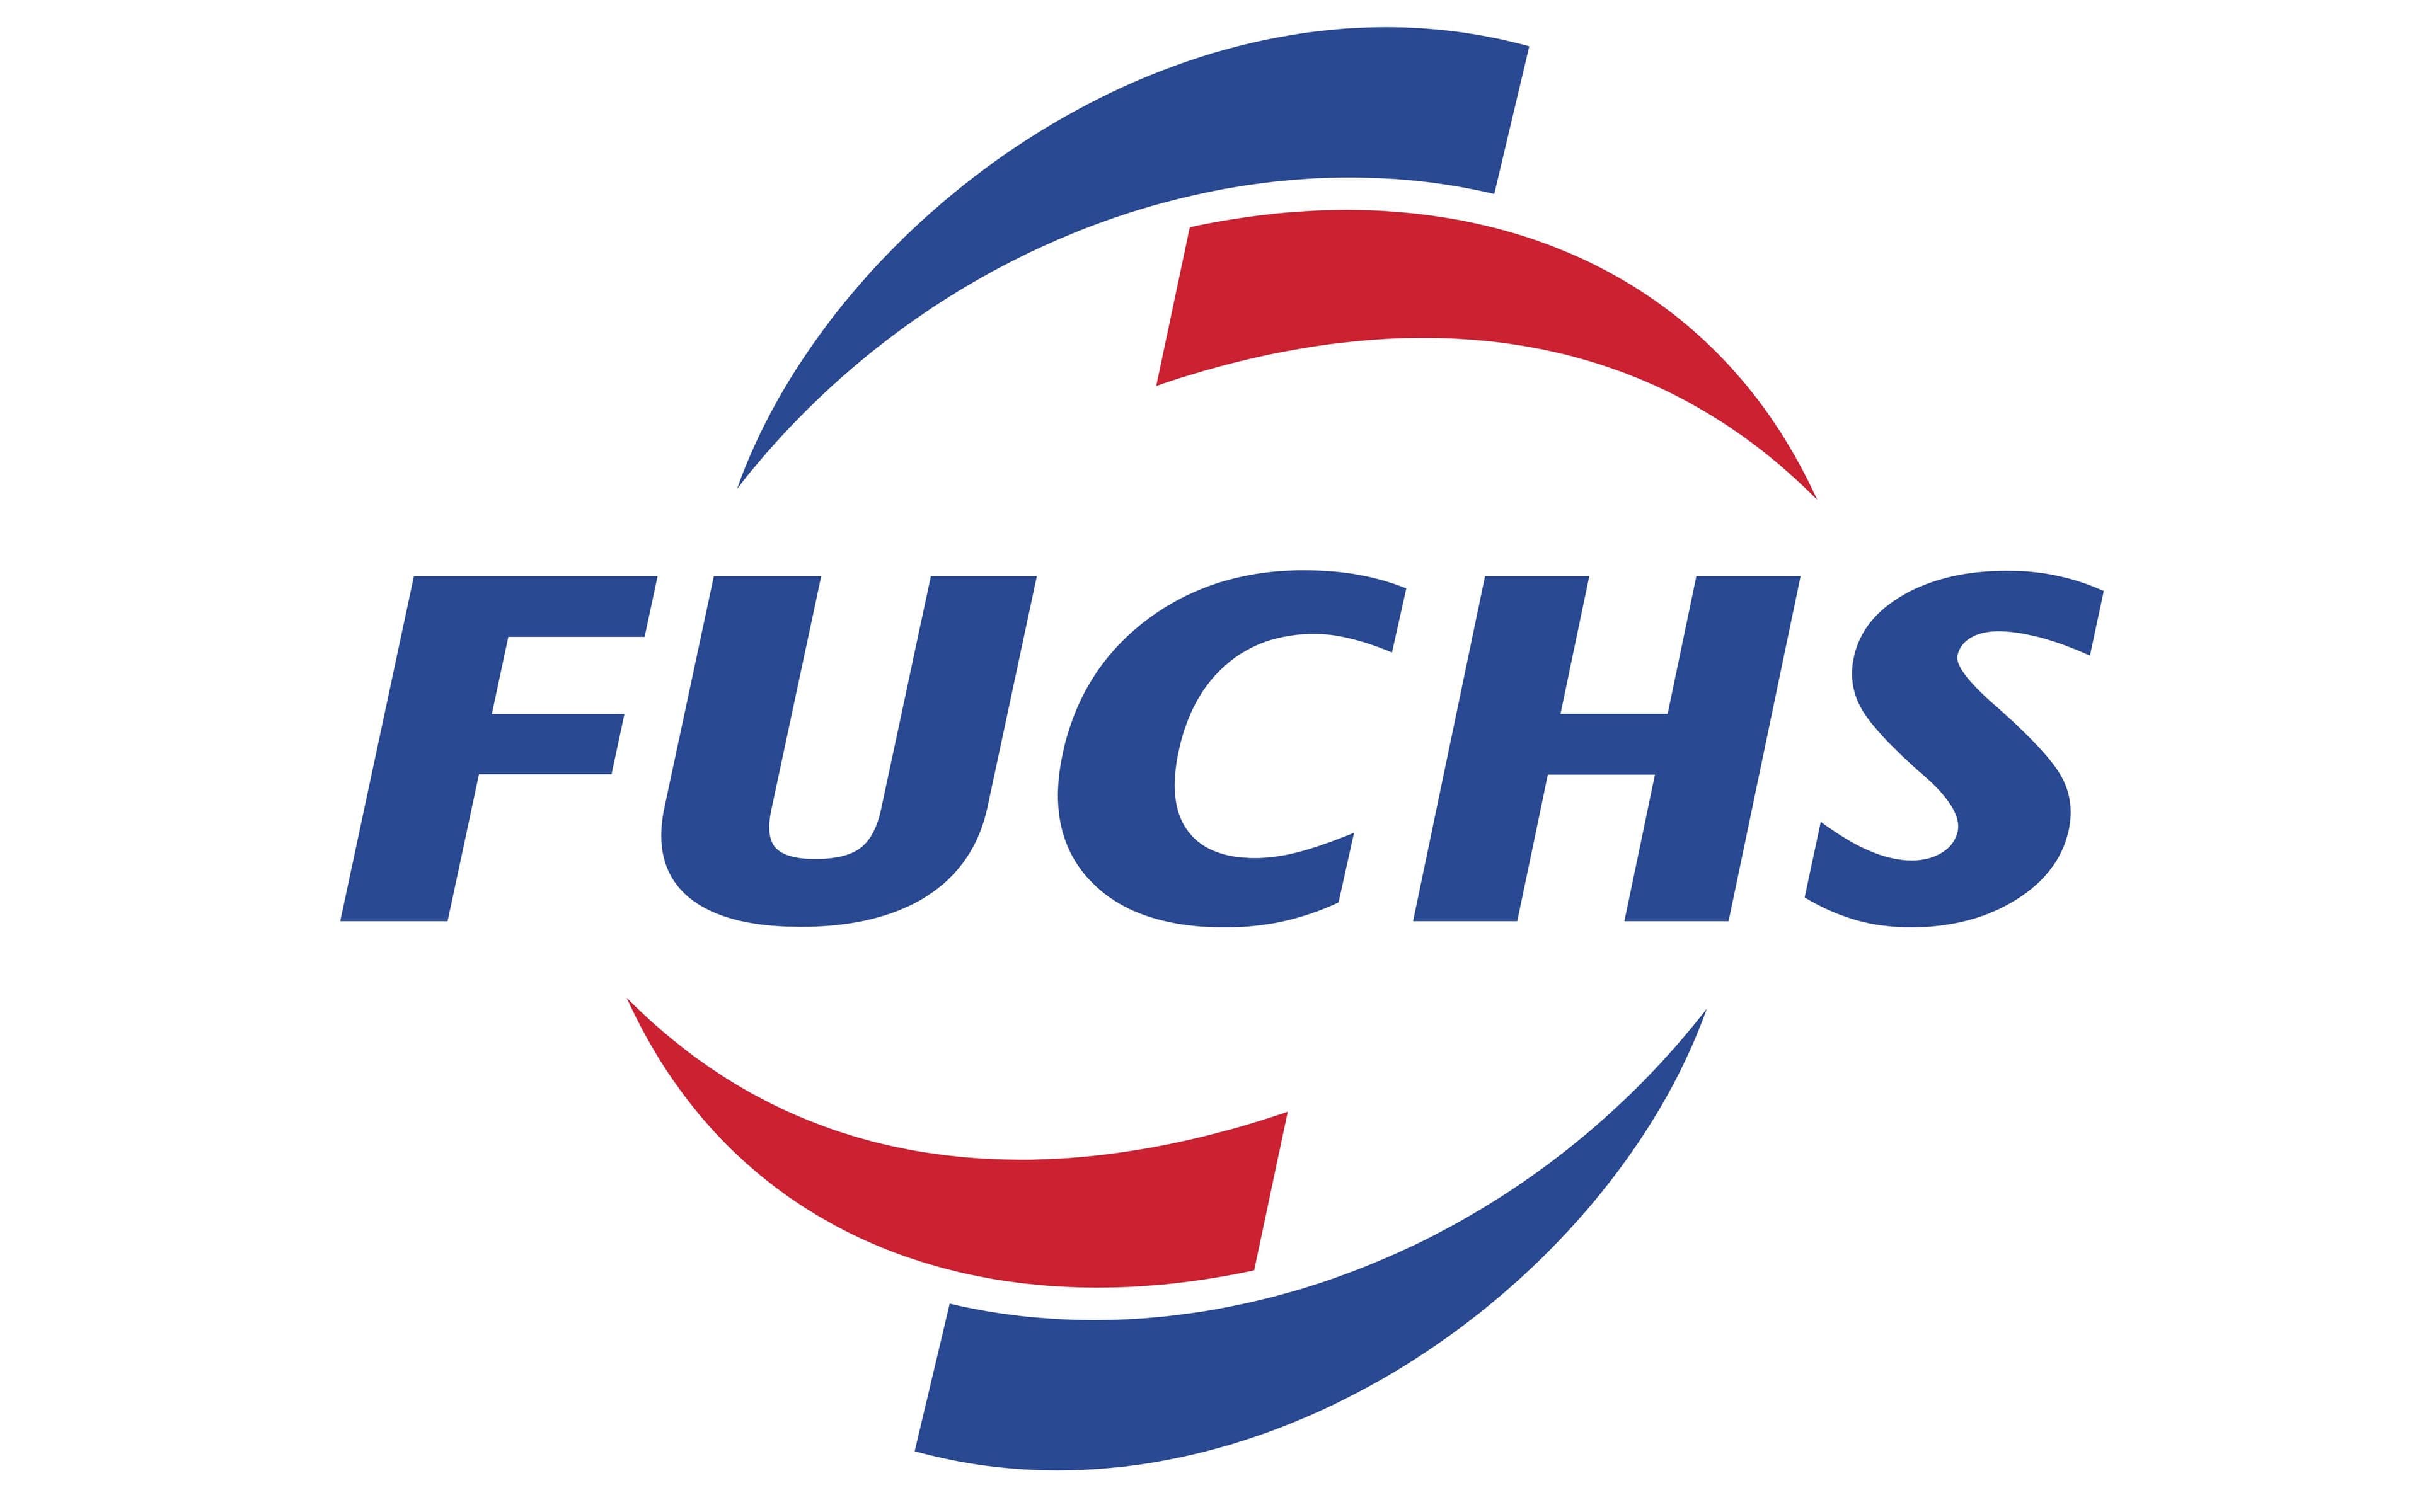 Fuchs symbol